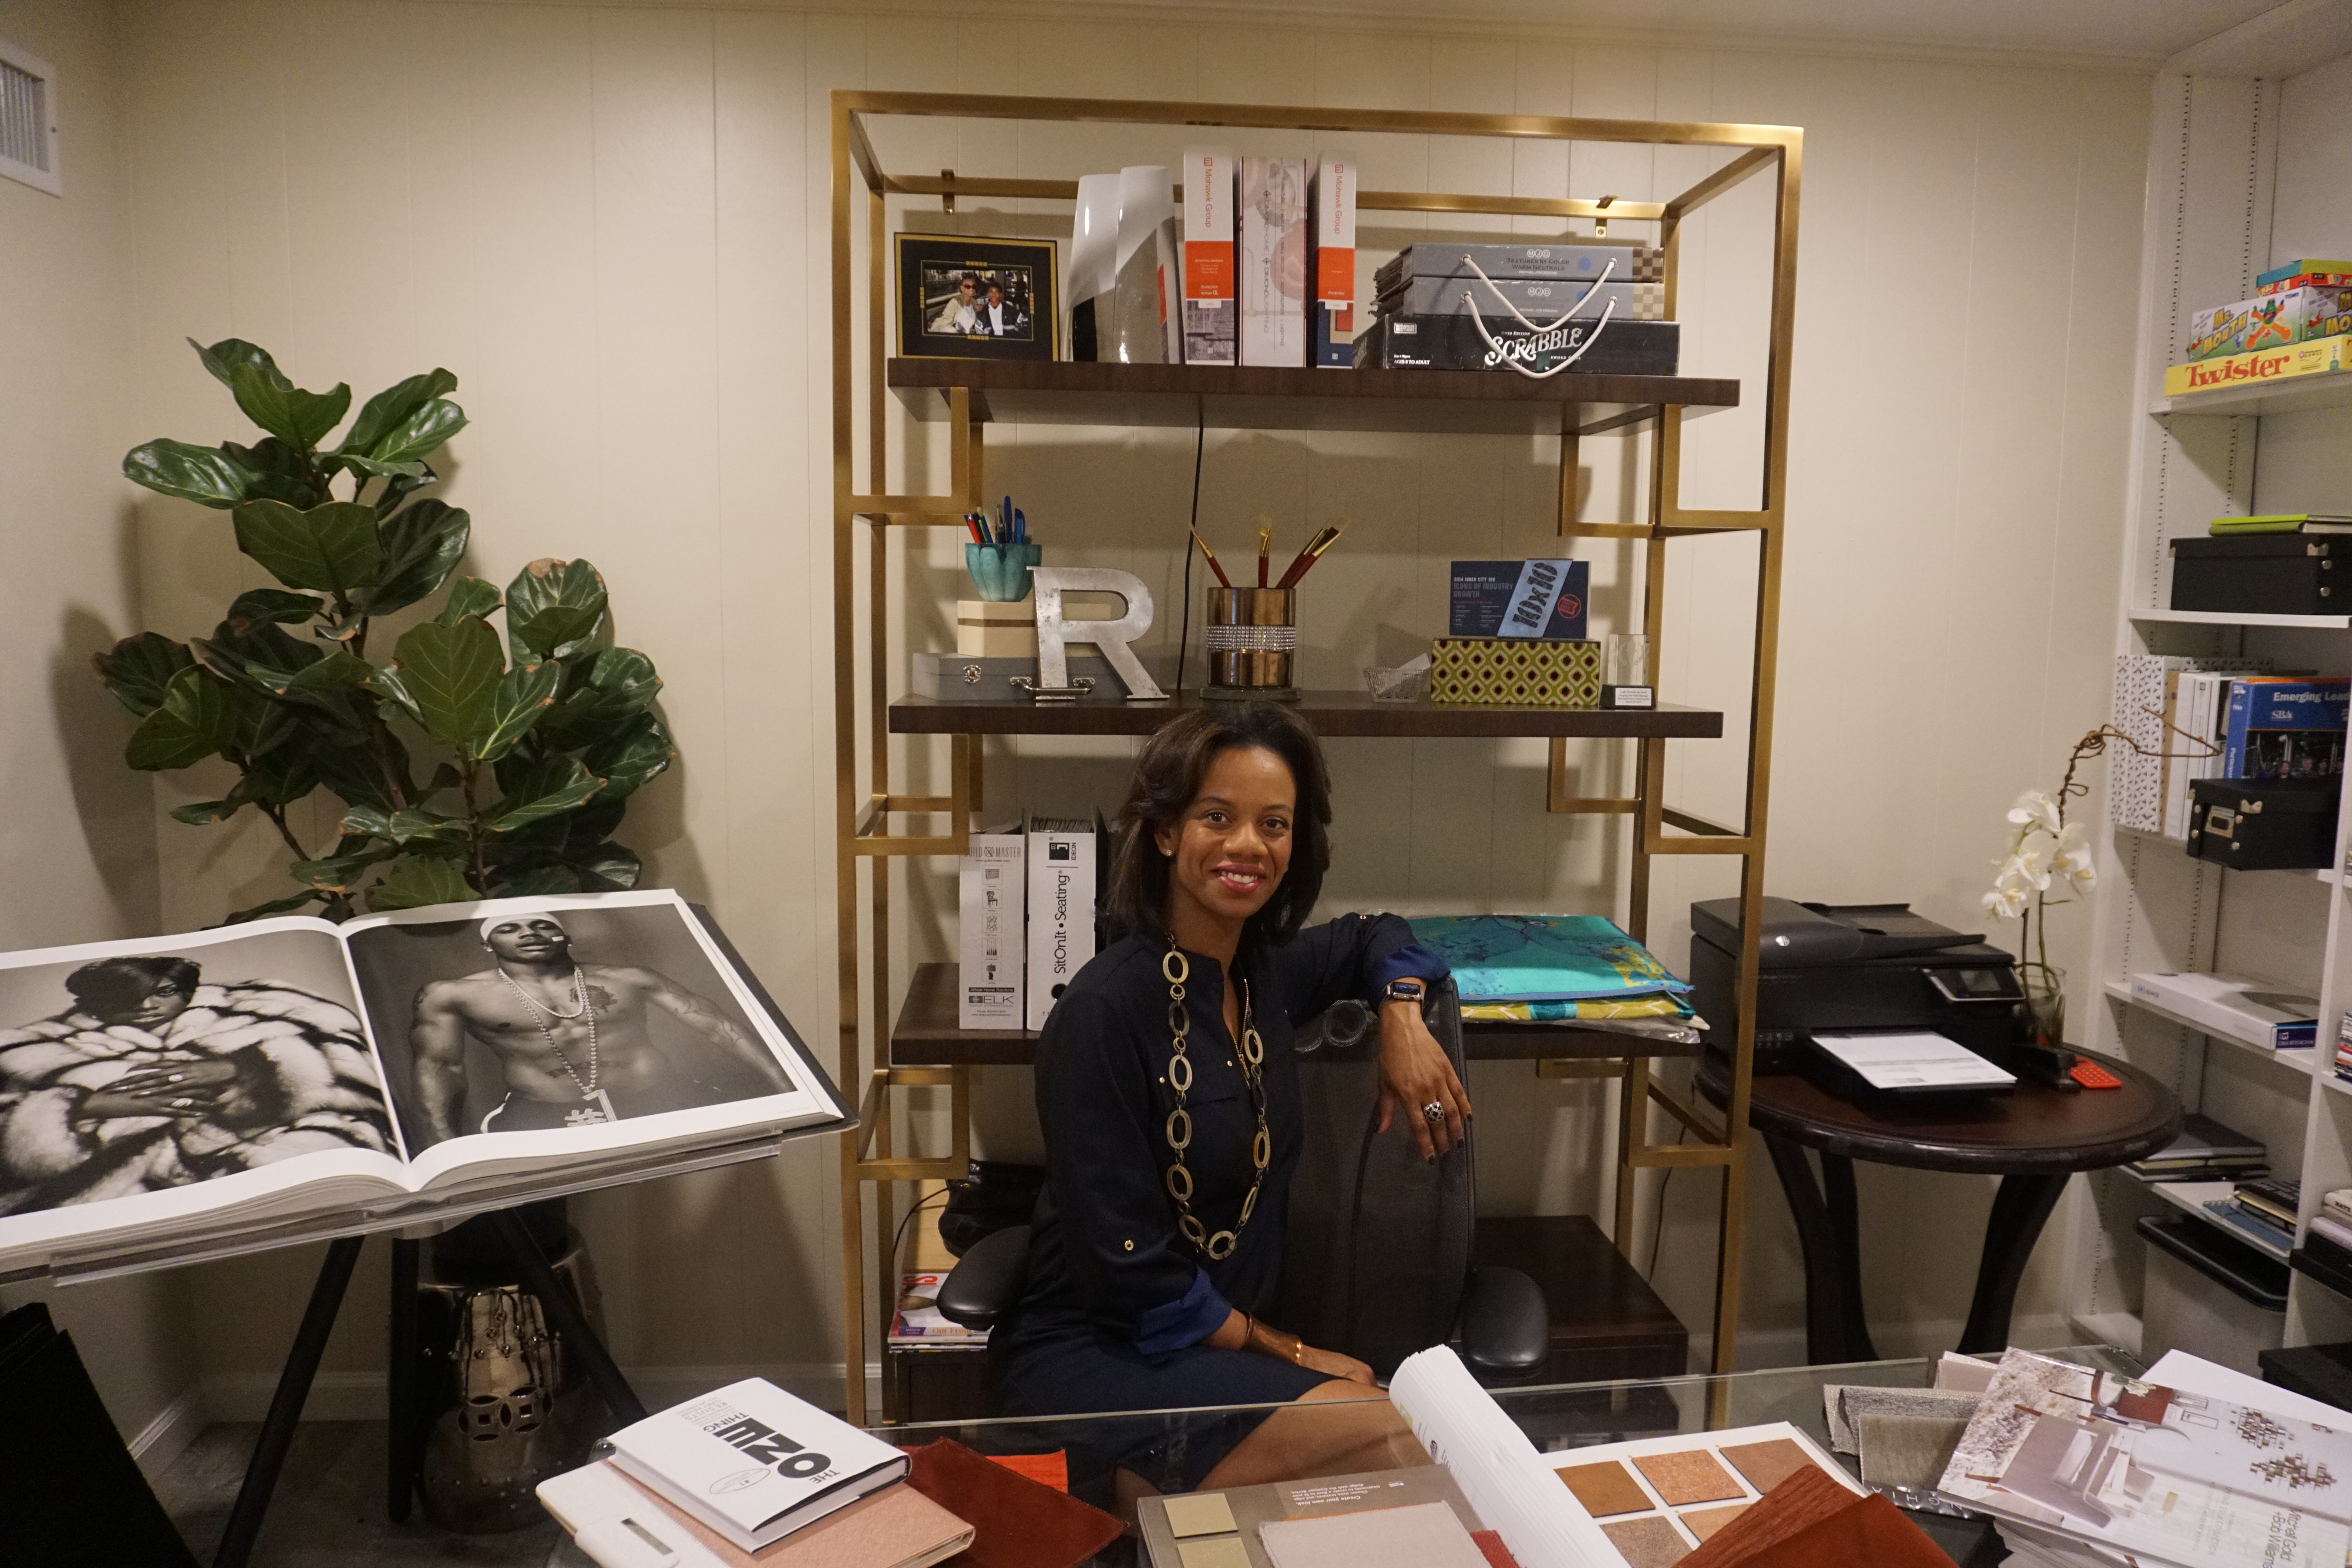 Ronda Jackson, the founder of decor interior design